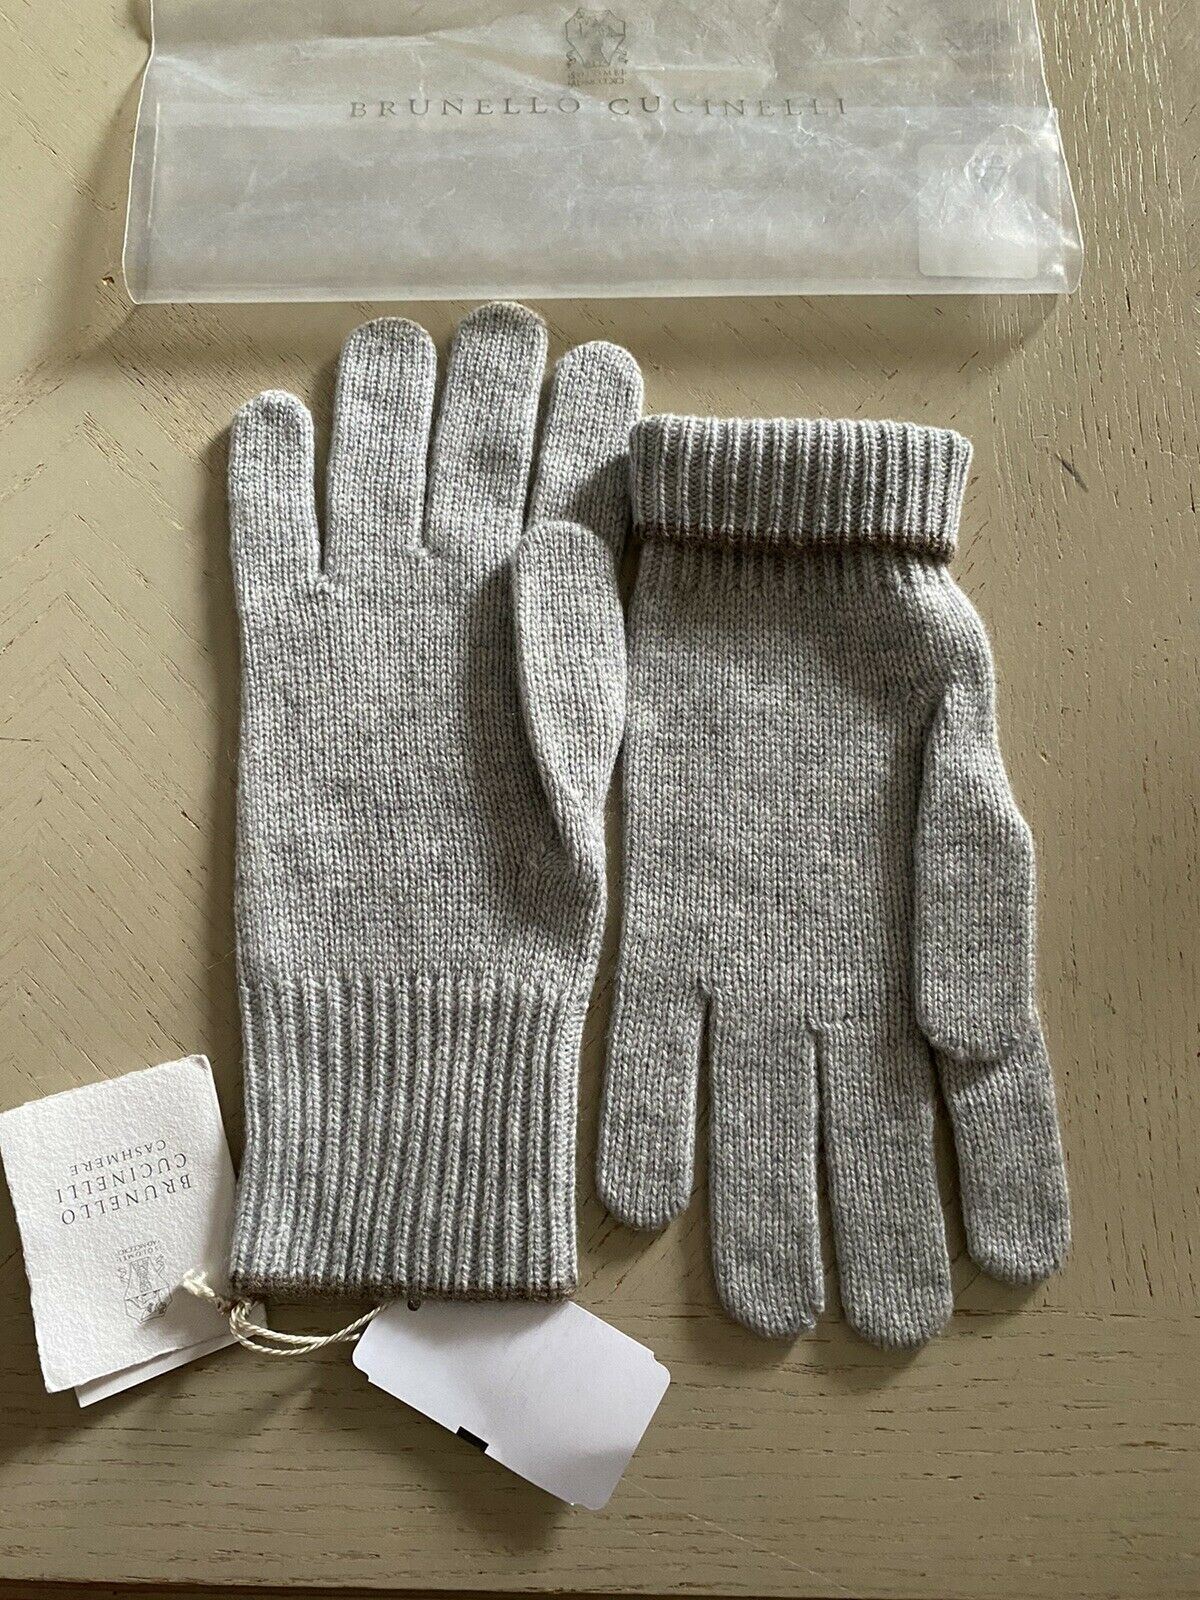 Neu mit Etikett: 555 $ Brunello Cucinelli Damen-Handschuhe aus geripptem Kaschmir, Grau, Größe L, Italien